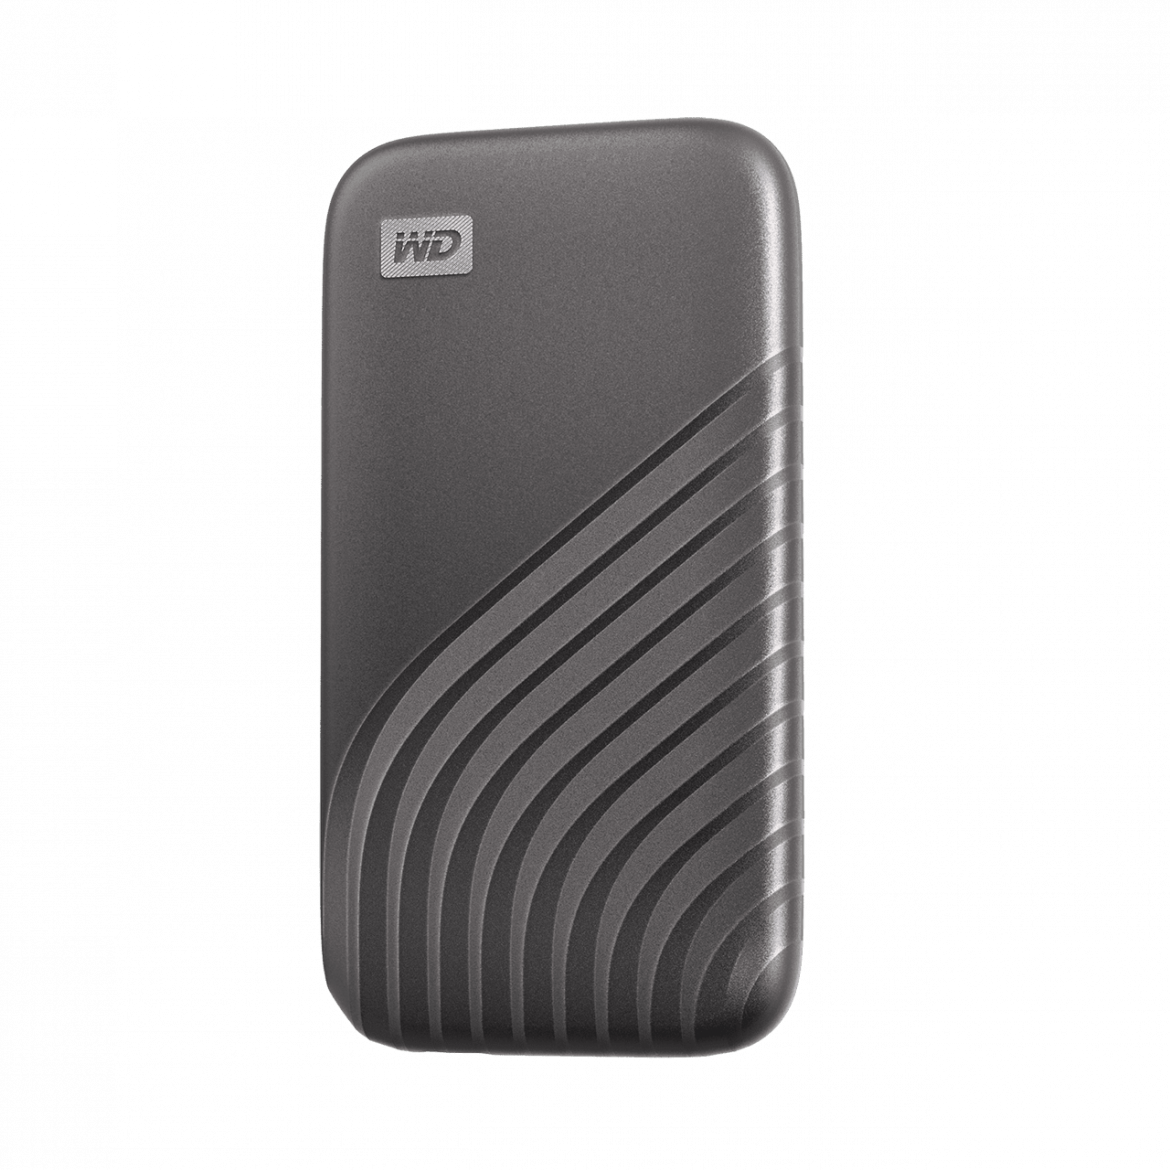 WD MY PASSPORT SSD EXTERNAL DRIVE – 1TB  GRAY  SKU# WDBAGF0010BGY